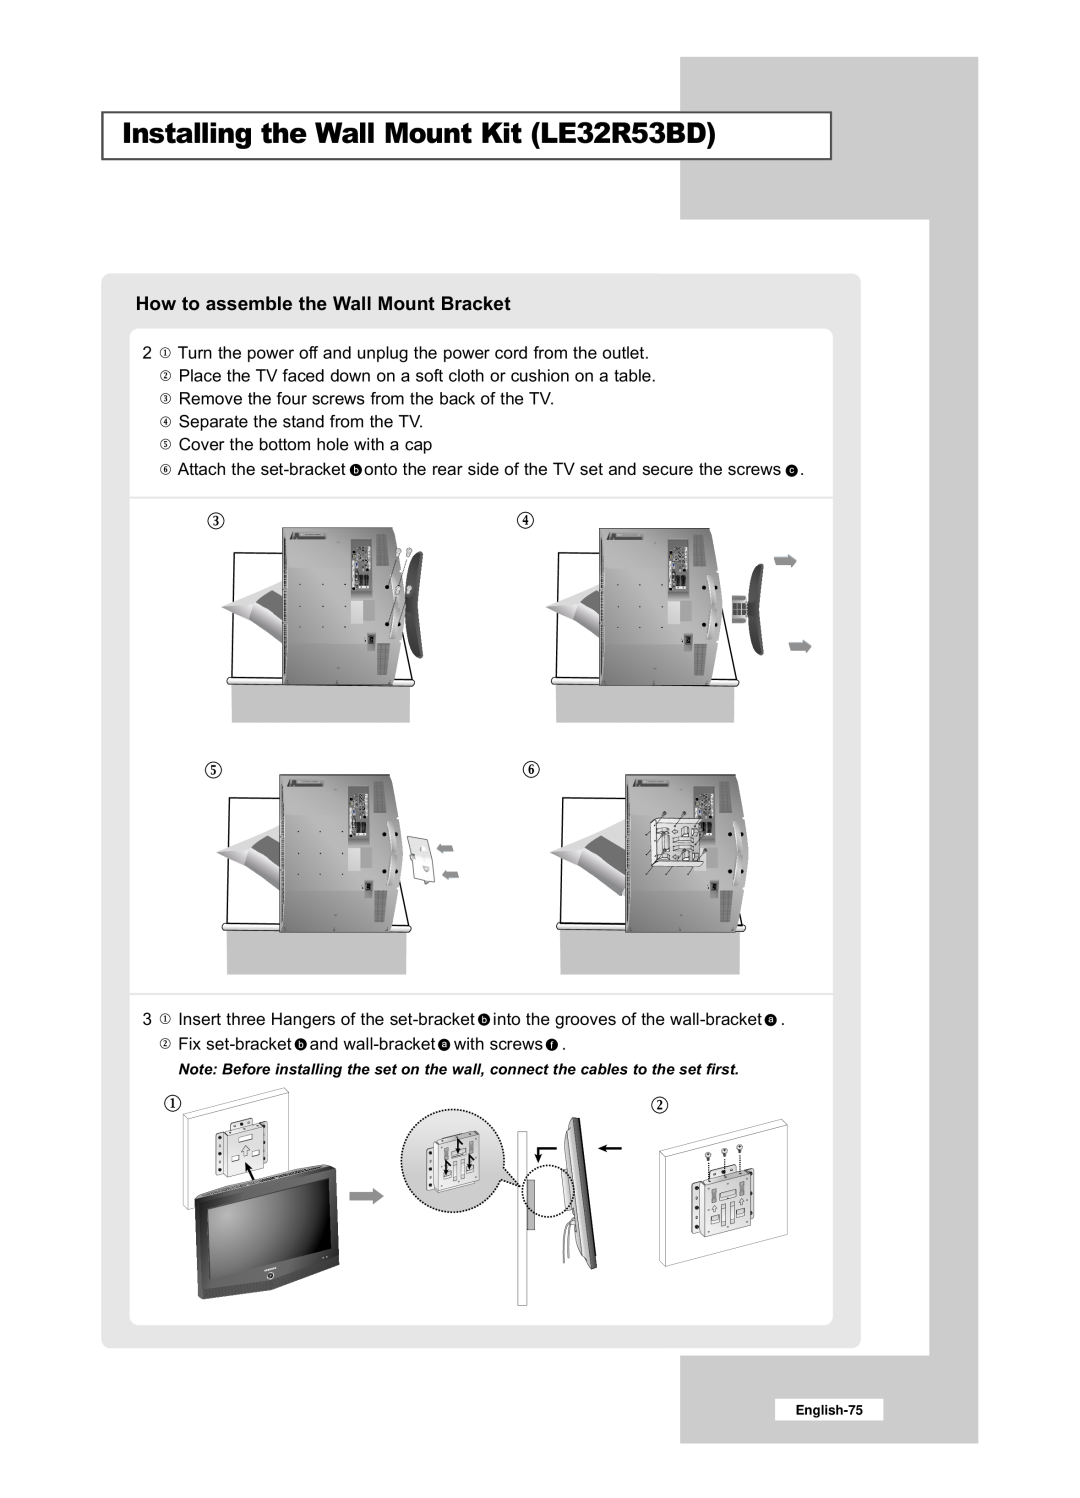 Samsung LE26R53BD manual Installing the Wall Mount Kit LE32R53BD, How to assemble the Wall Mount Bracket, English-75 